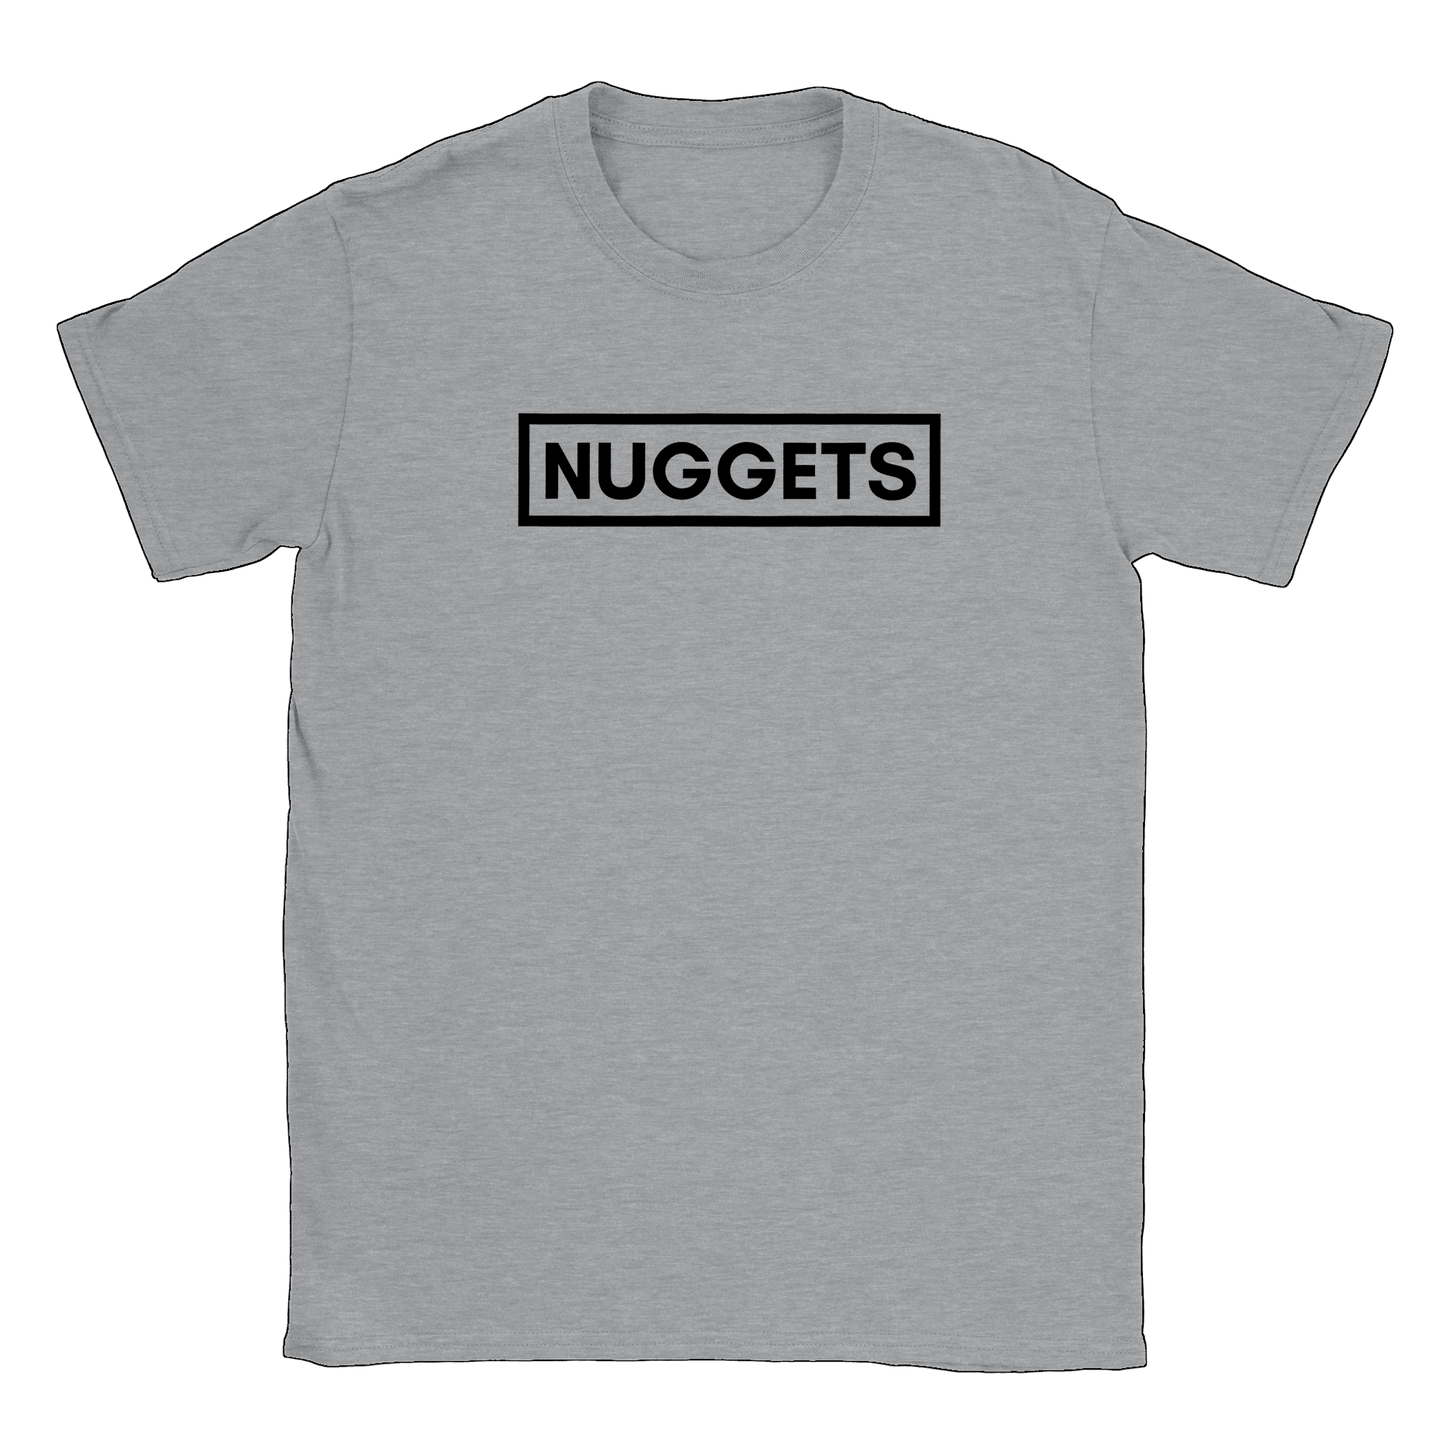 Nuggets - T-shirt Sports Grey